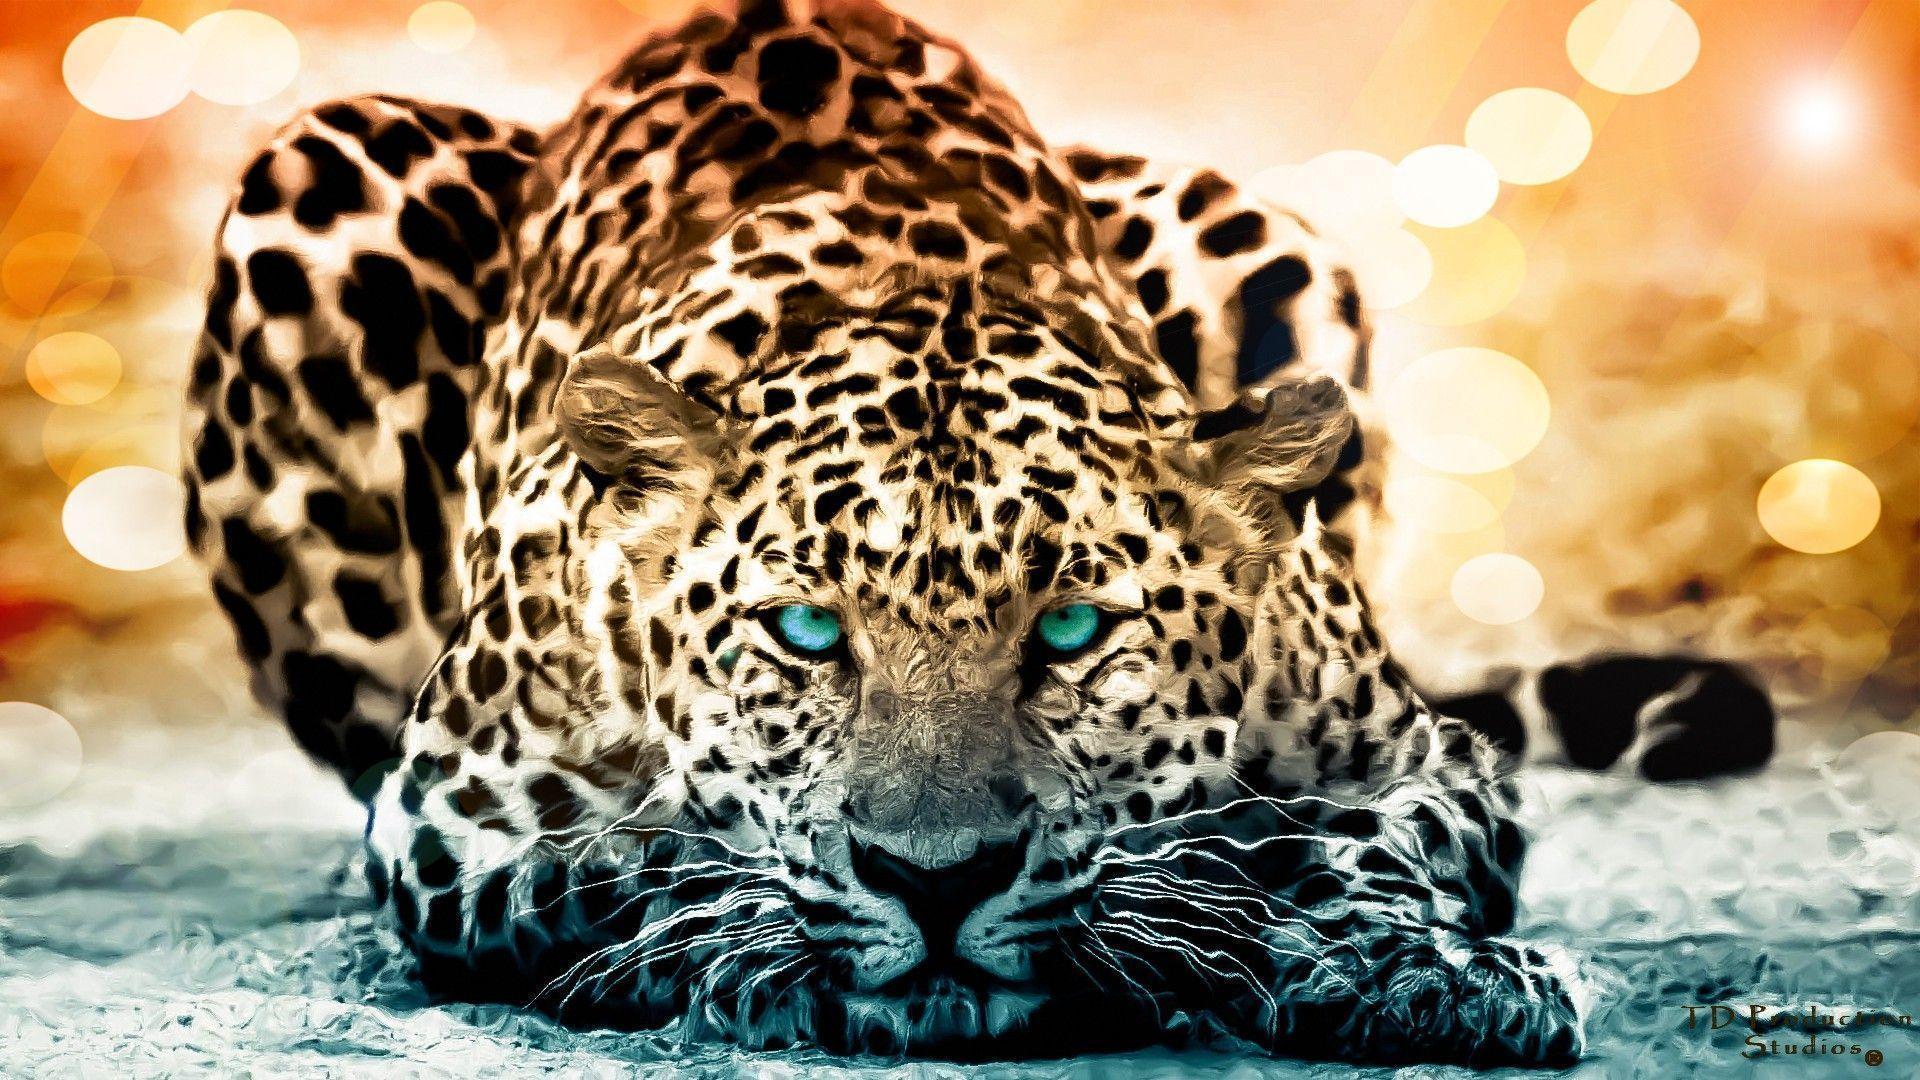 Leopard Background 32 403691 High Definition Wallpaper. wallalay